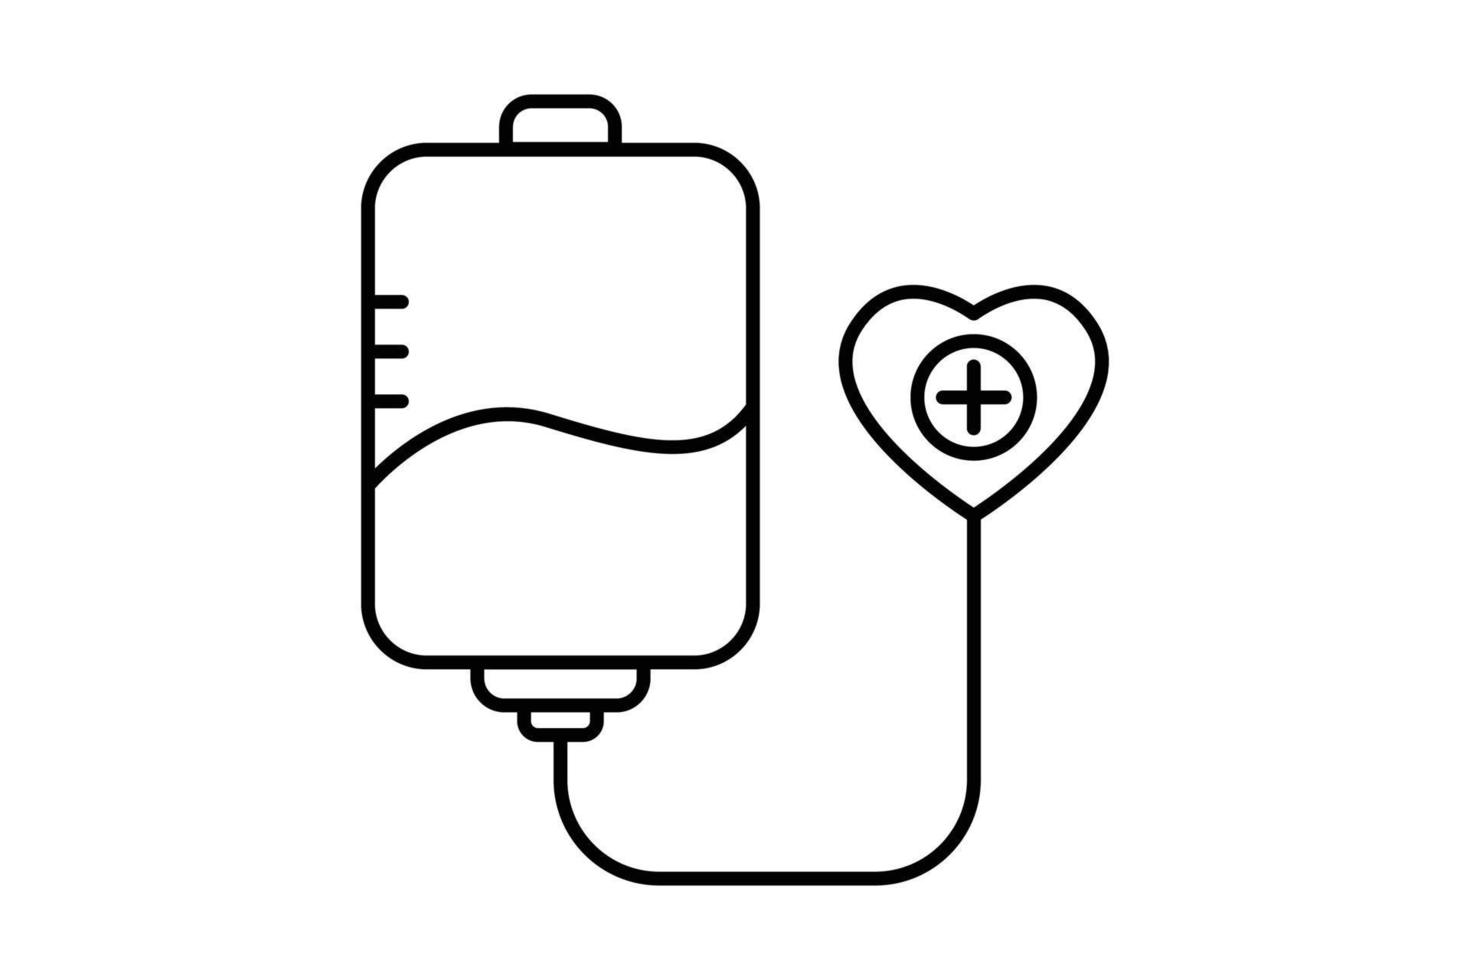 O Positive Blood in the Bag. Blood Bag Vector Illustration. Healthcare  Conceptual Symbol Design Stock Vector - Illustration of medical, help:  233544643